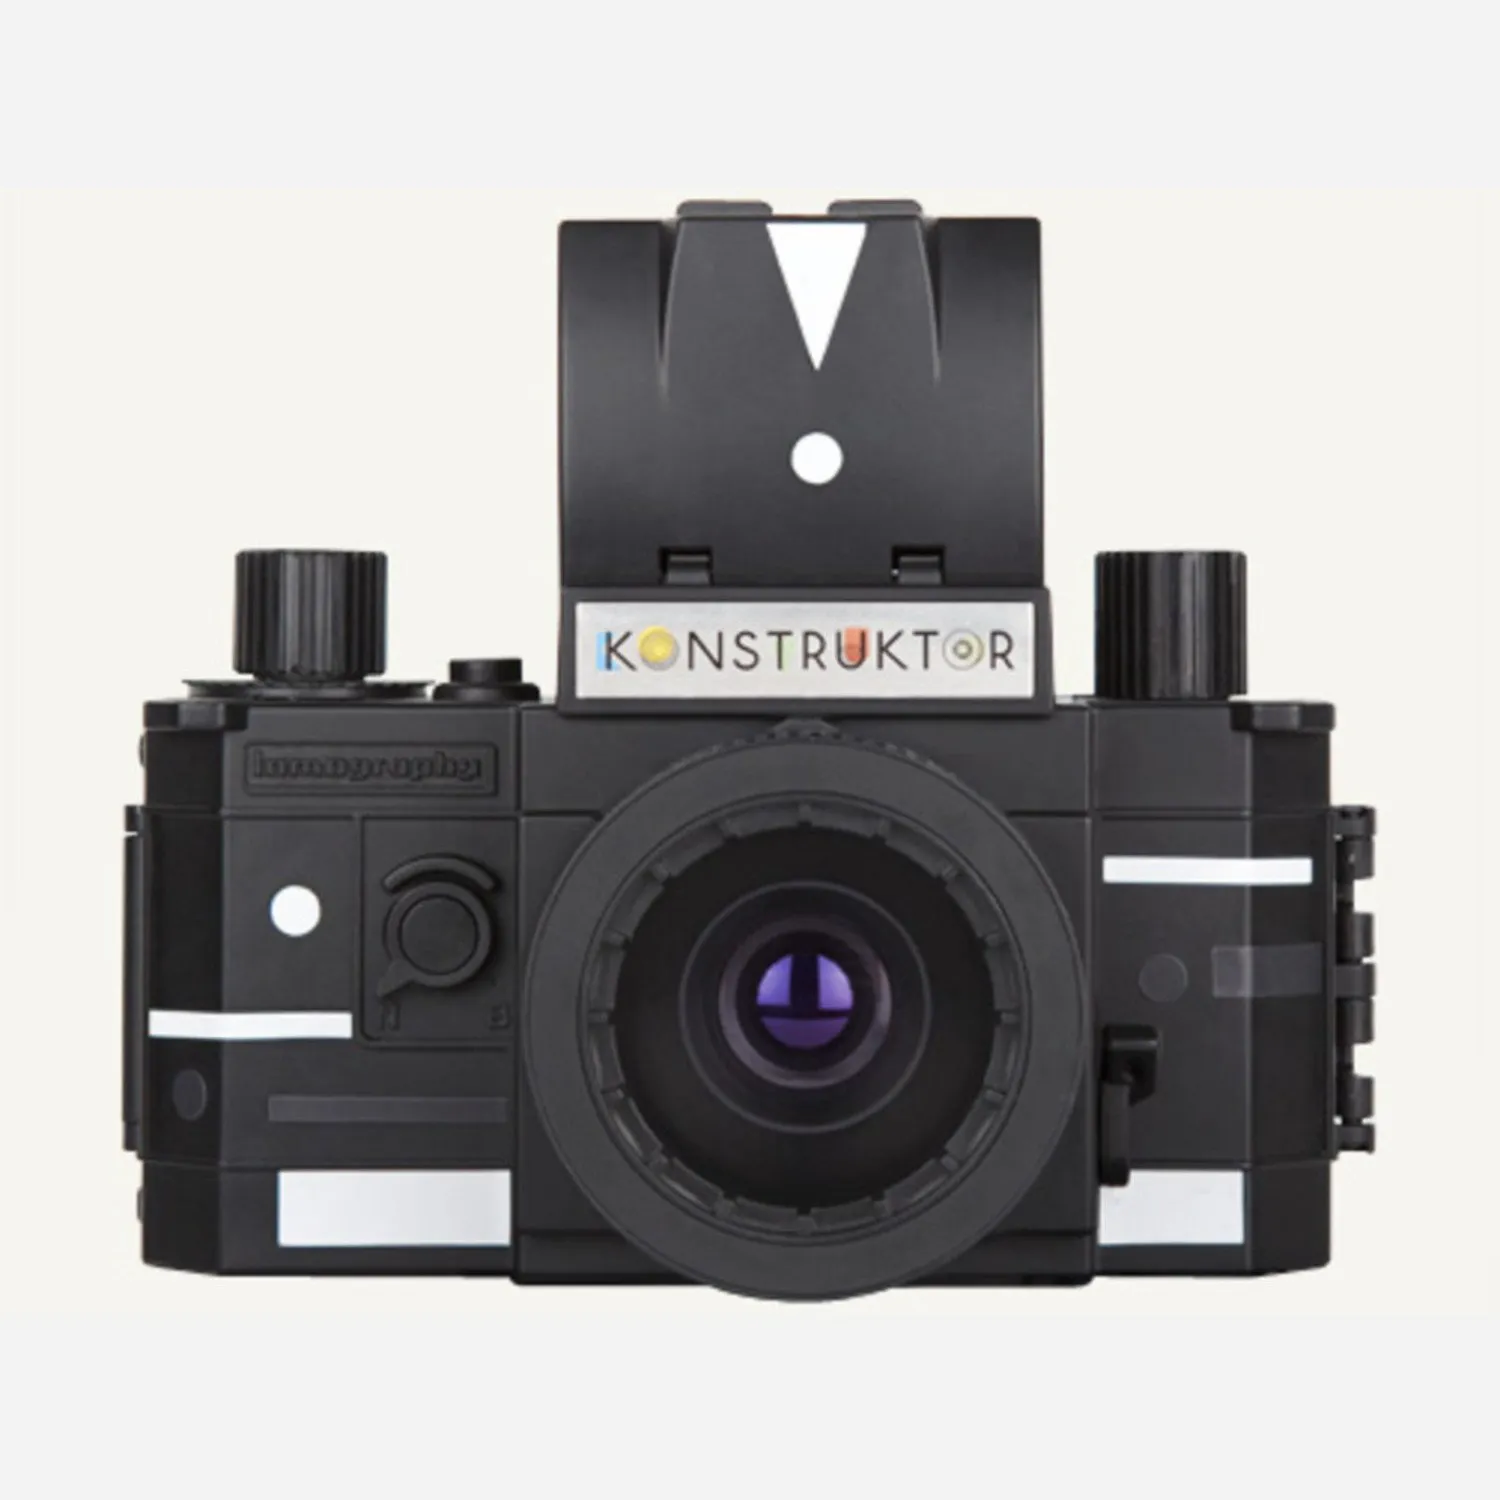 Photo of KONSTRUKTOR - DIY Film Camera Kit